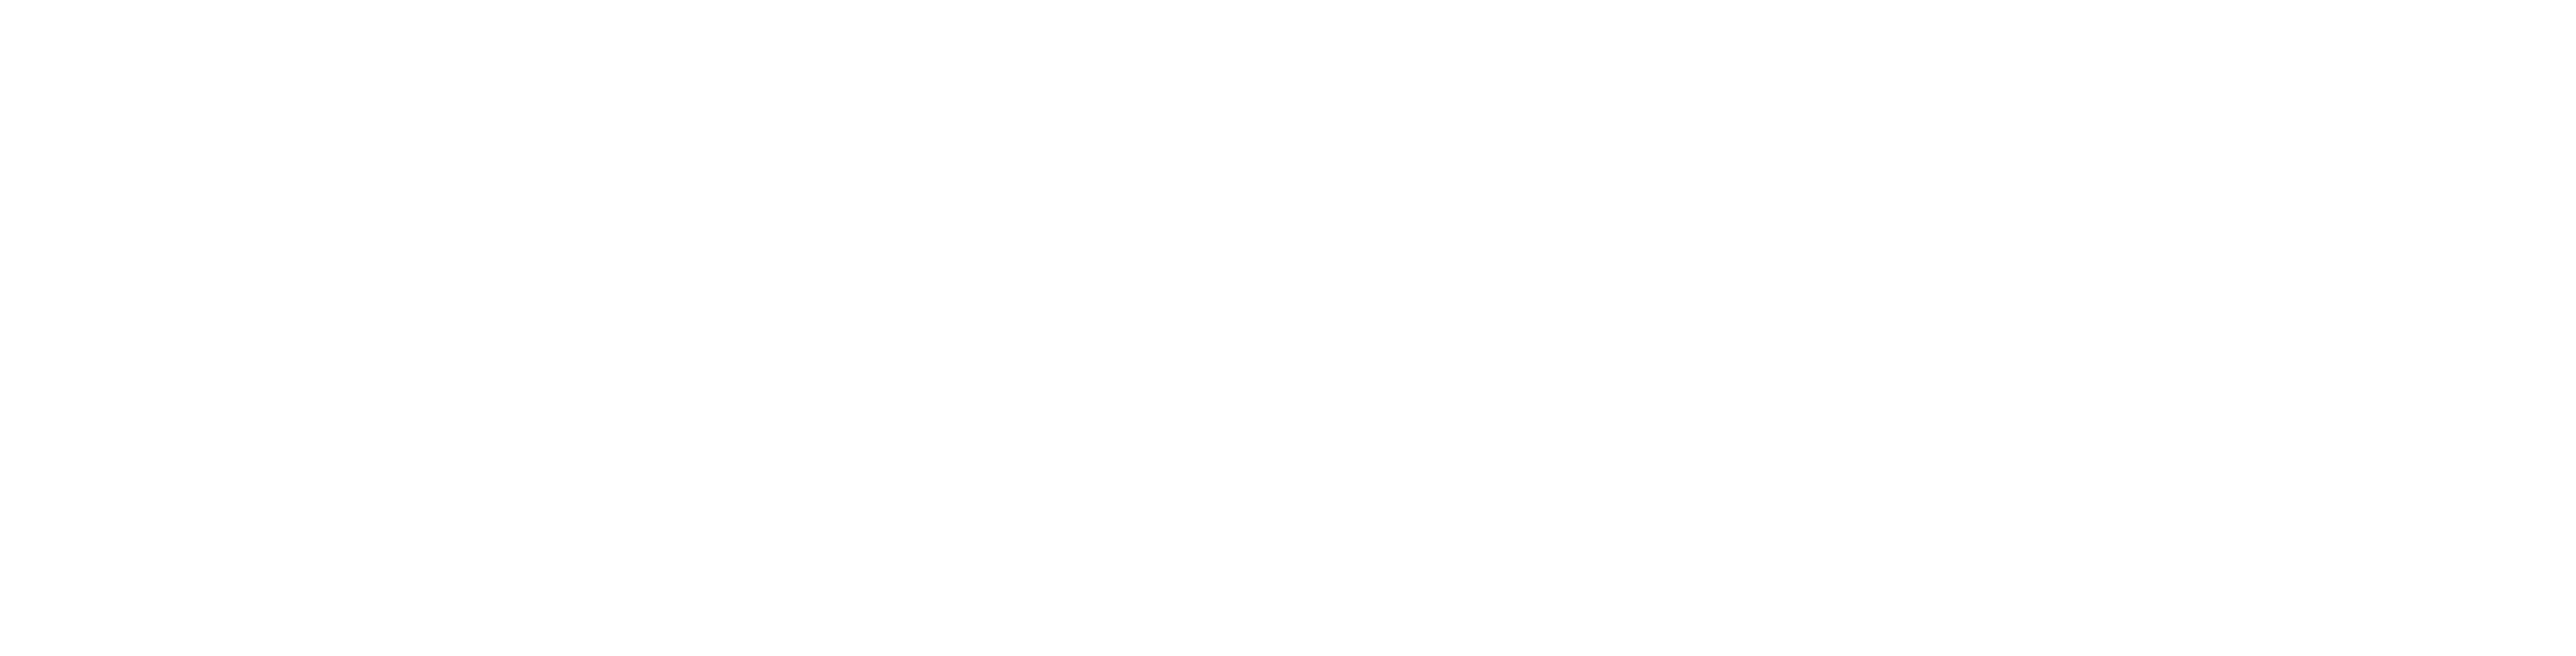 Hush... Hush, Sweet Charlotte logo